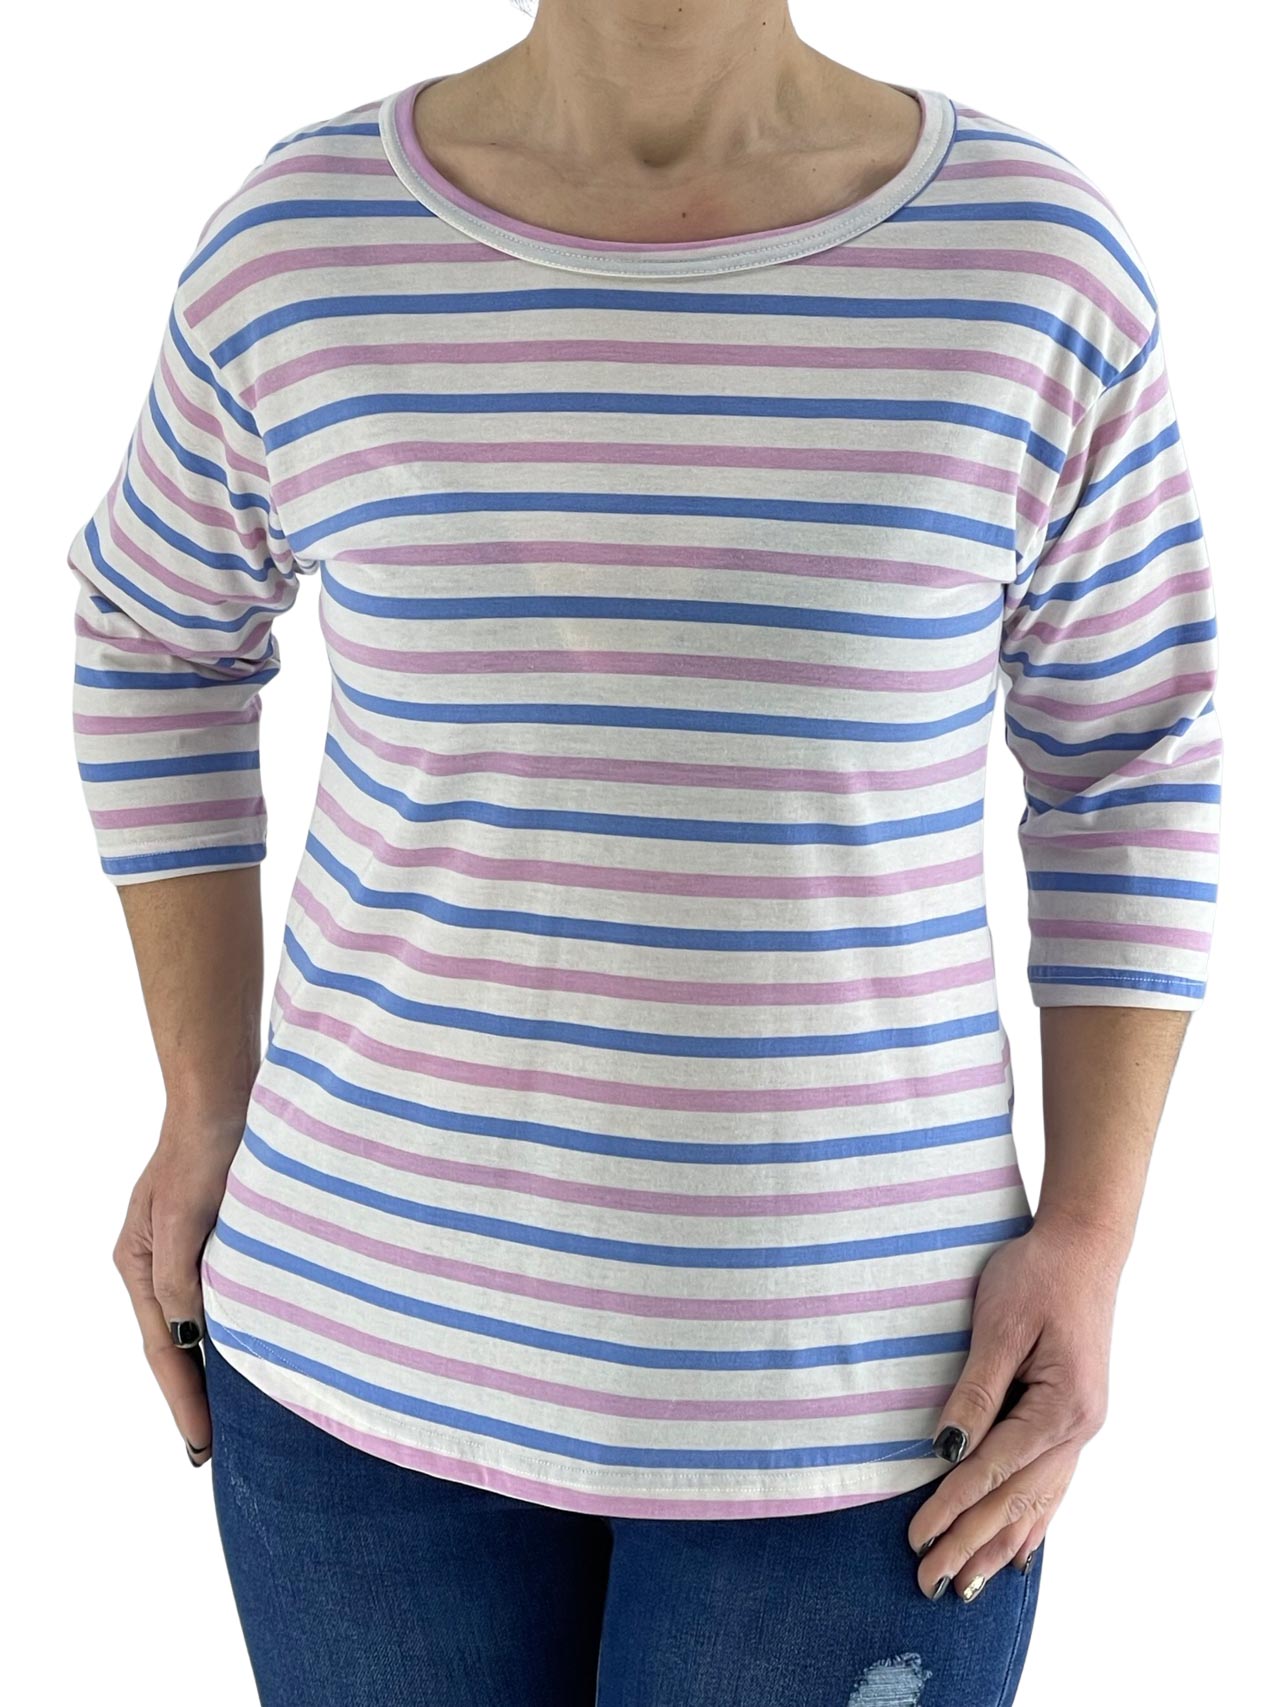 Women's striped blouse code MB2008